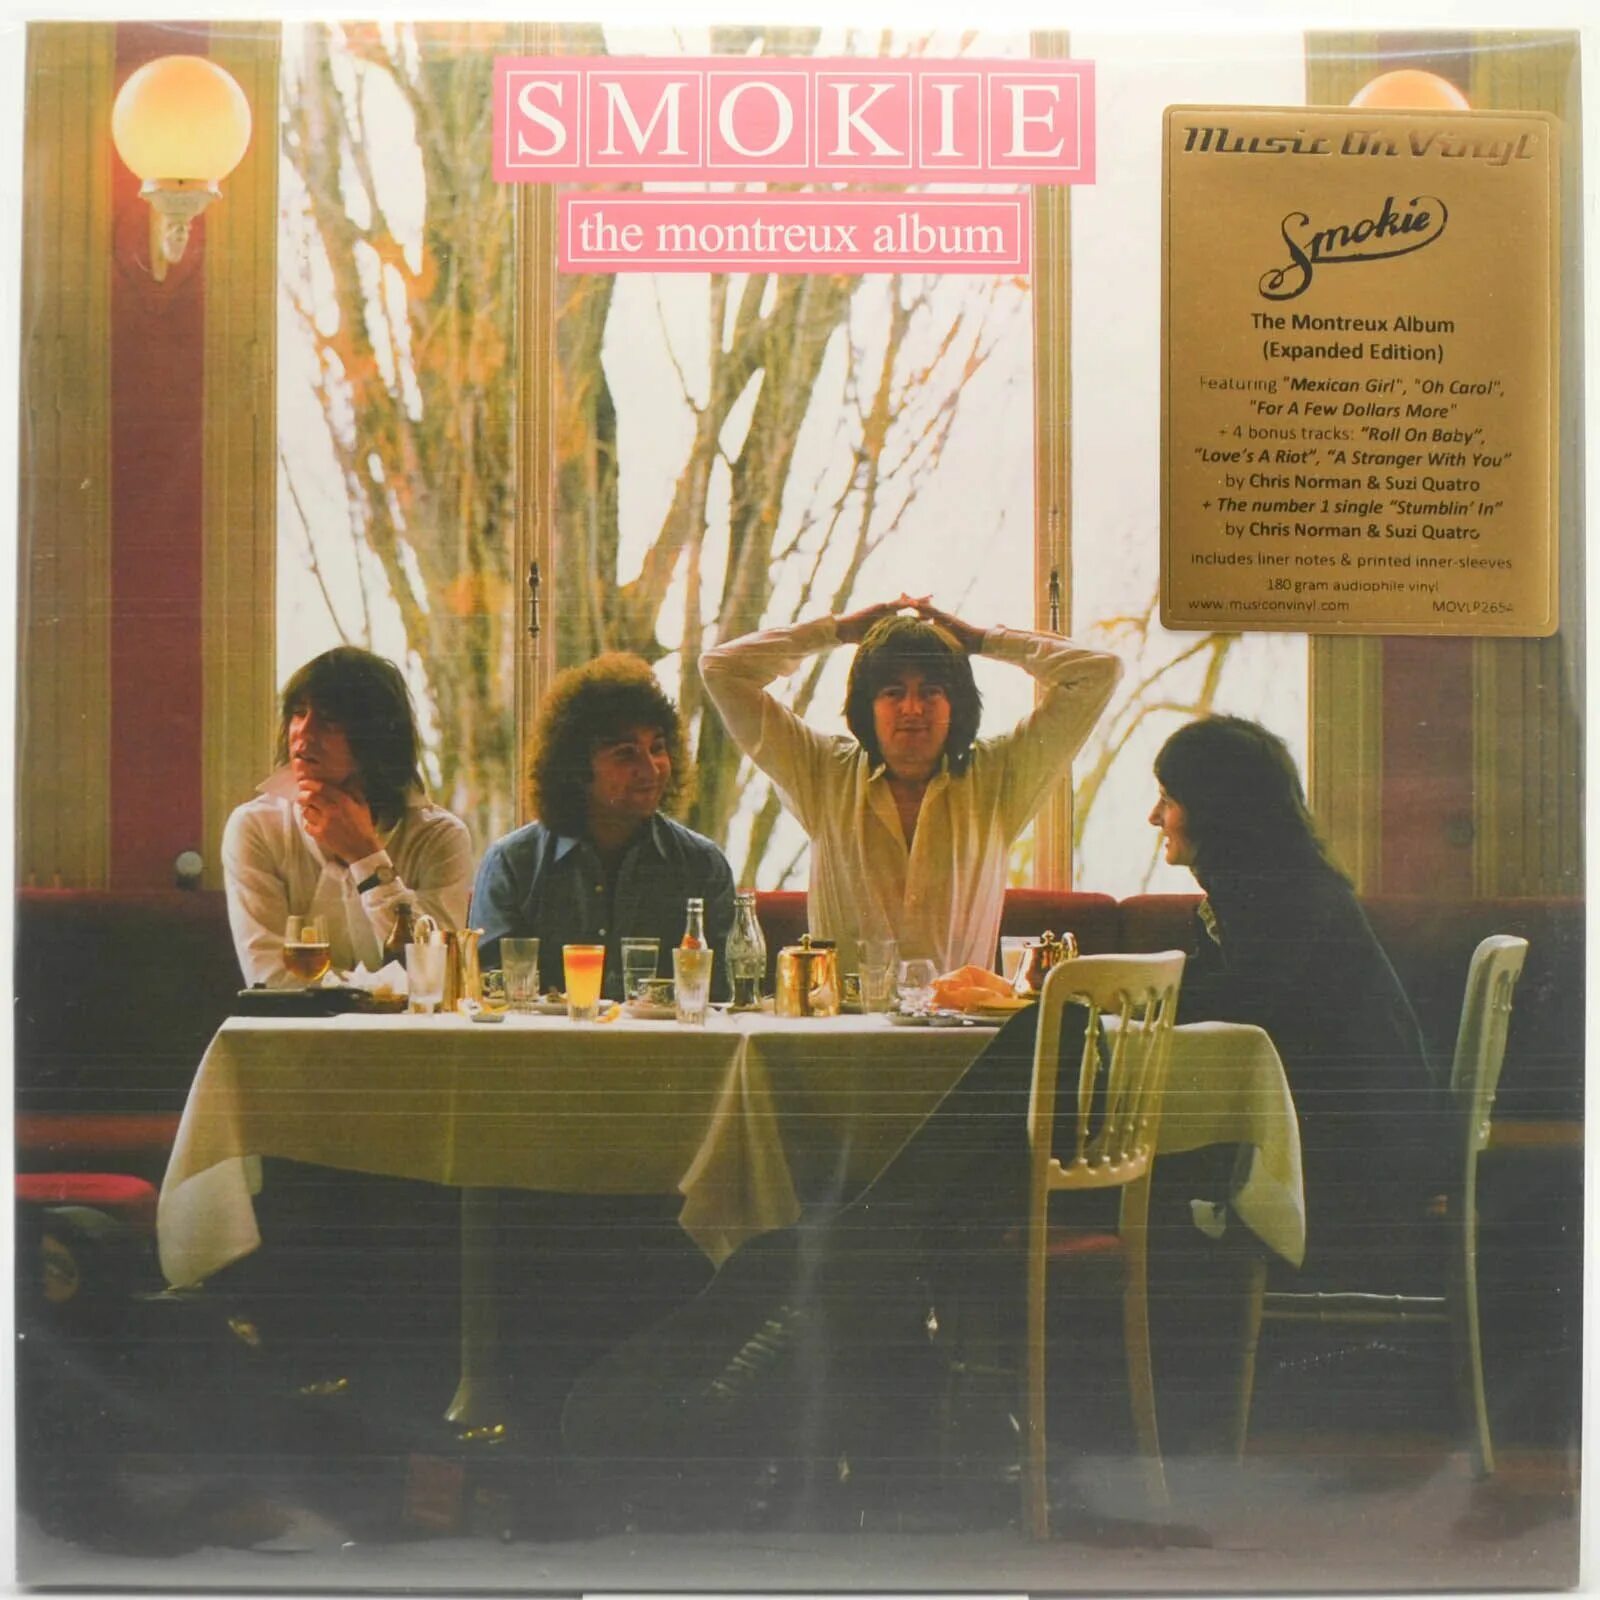 The Montreux album (1978). Smokie 1978 the Montreux album LP. Smokie "Montreux album". Smokie Montreux album 78.